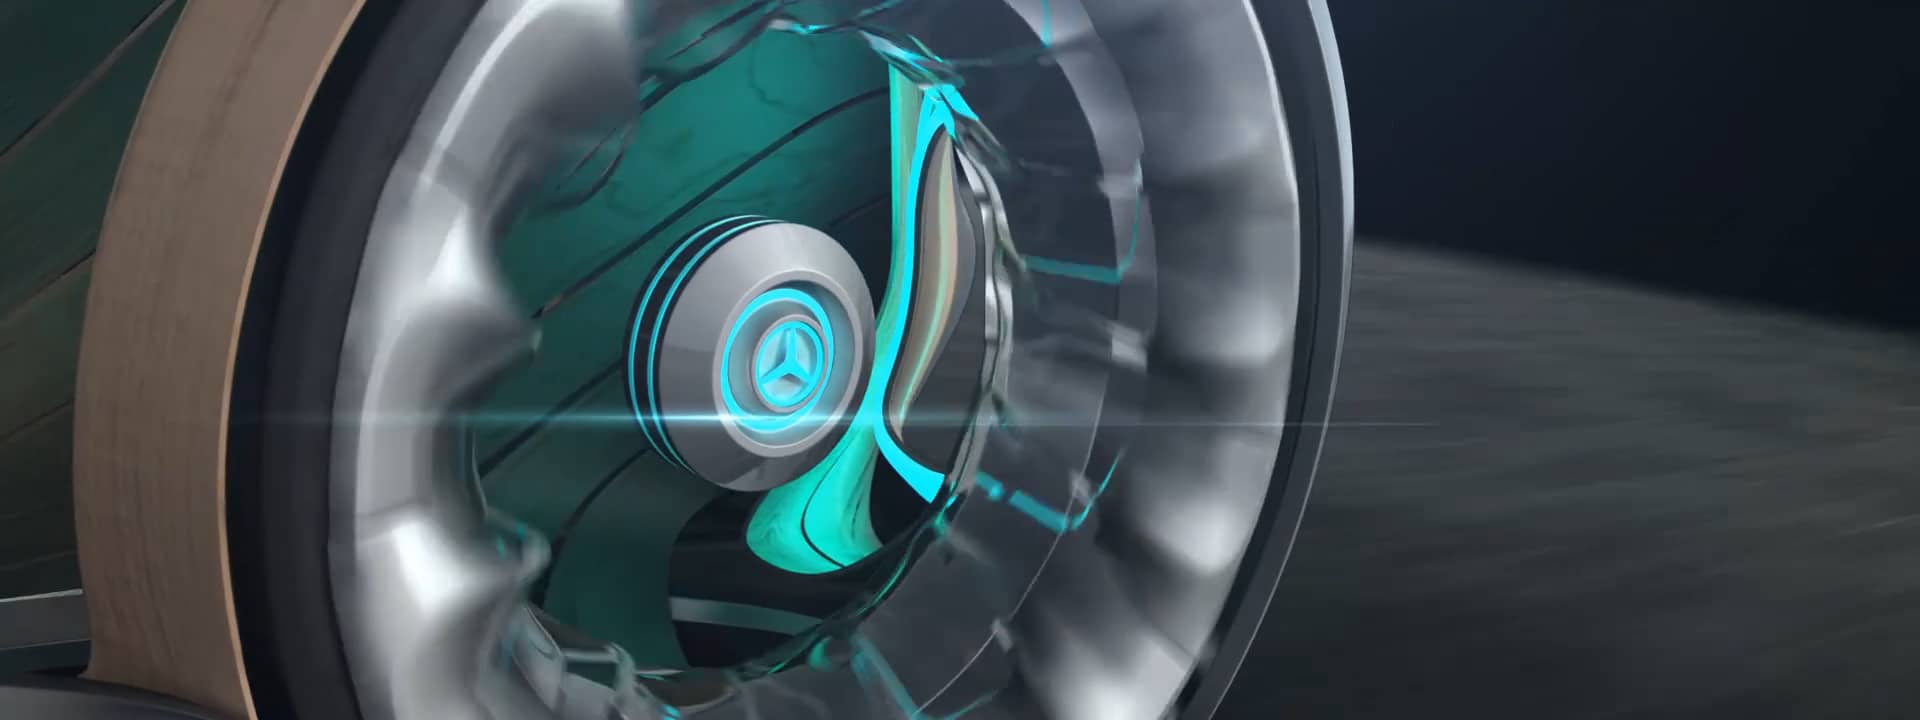 Mercedes–Benz Alpha Concept on Vimeo